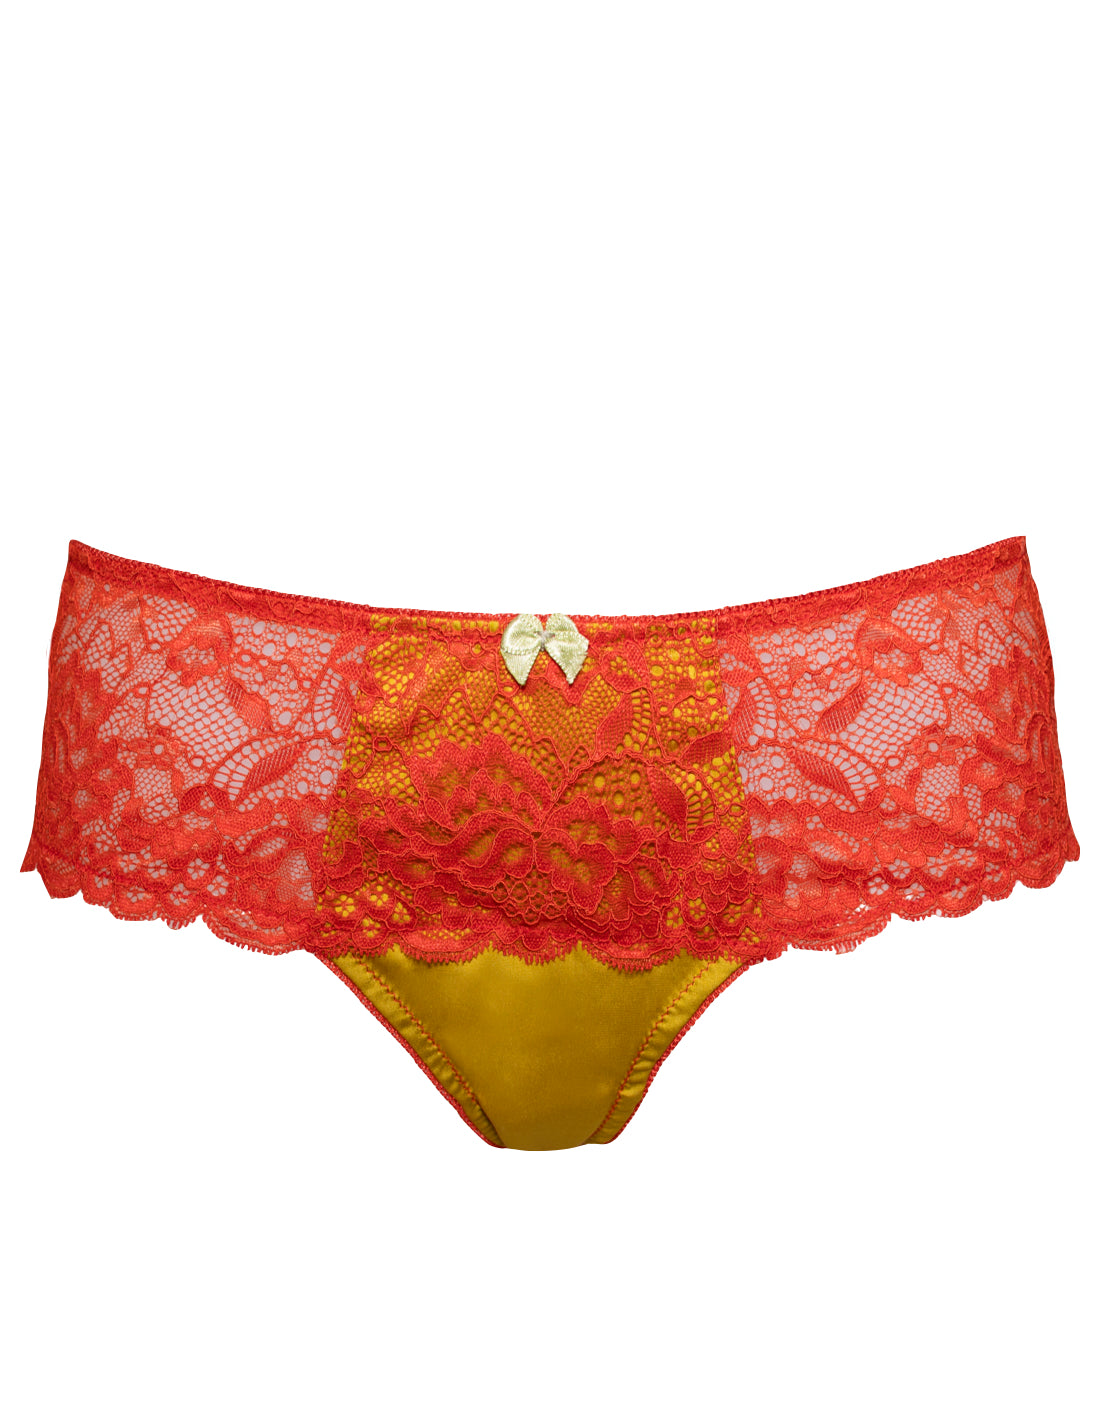 Boyshort Knickers  Luxury Lace Thongs & Sexy Designer Panties - Mimi  Holliday